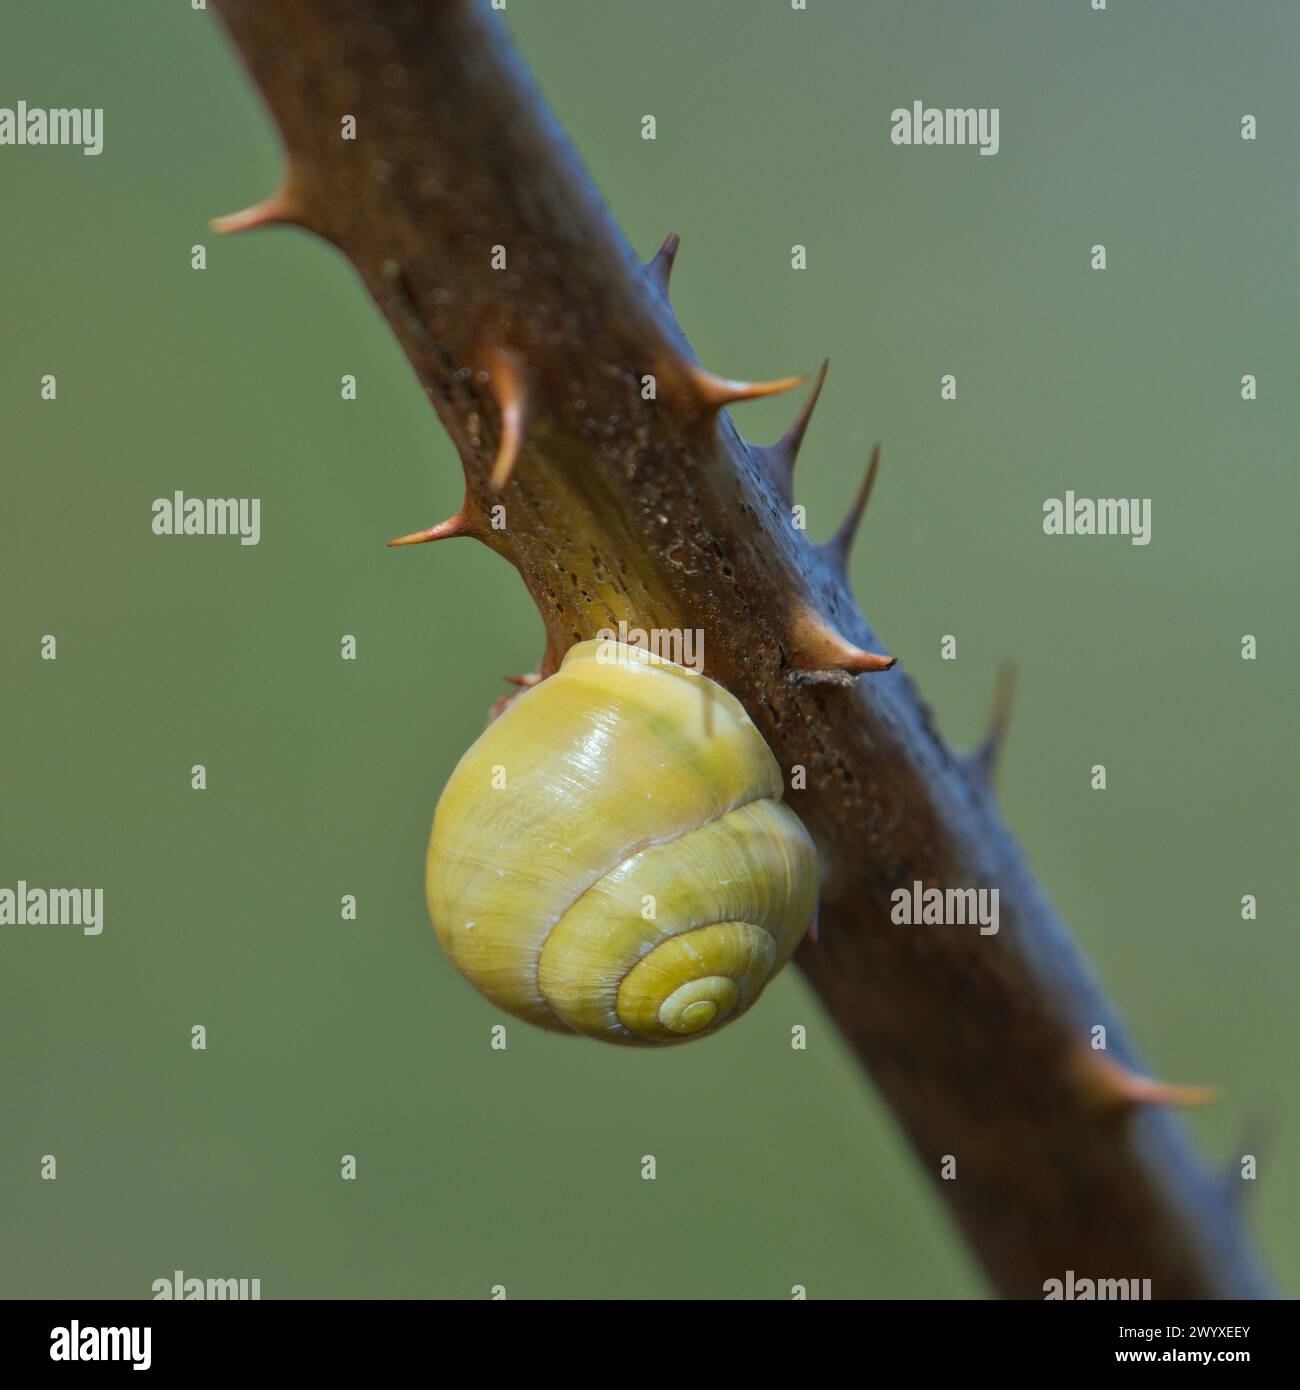 Land snail Cepaea hortensis shell on twig isolated on blurred background. Minimalistic photo. Stock Photo